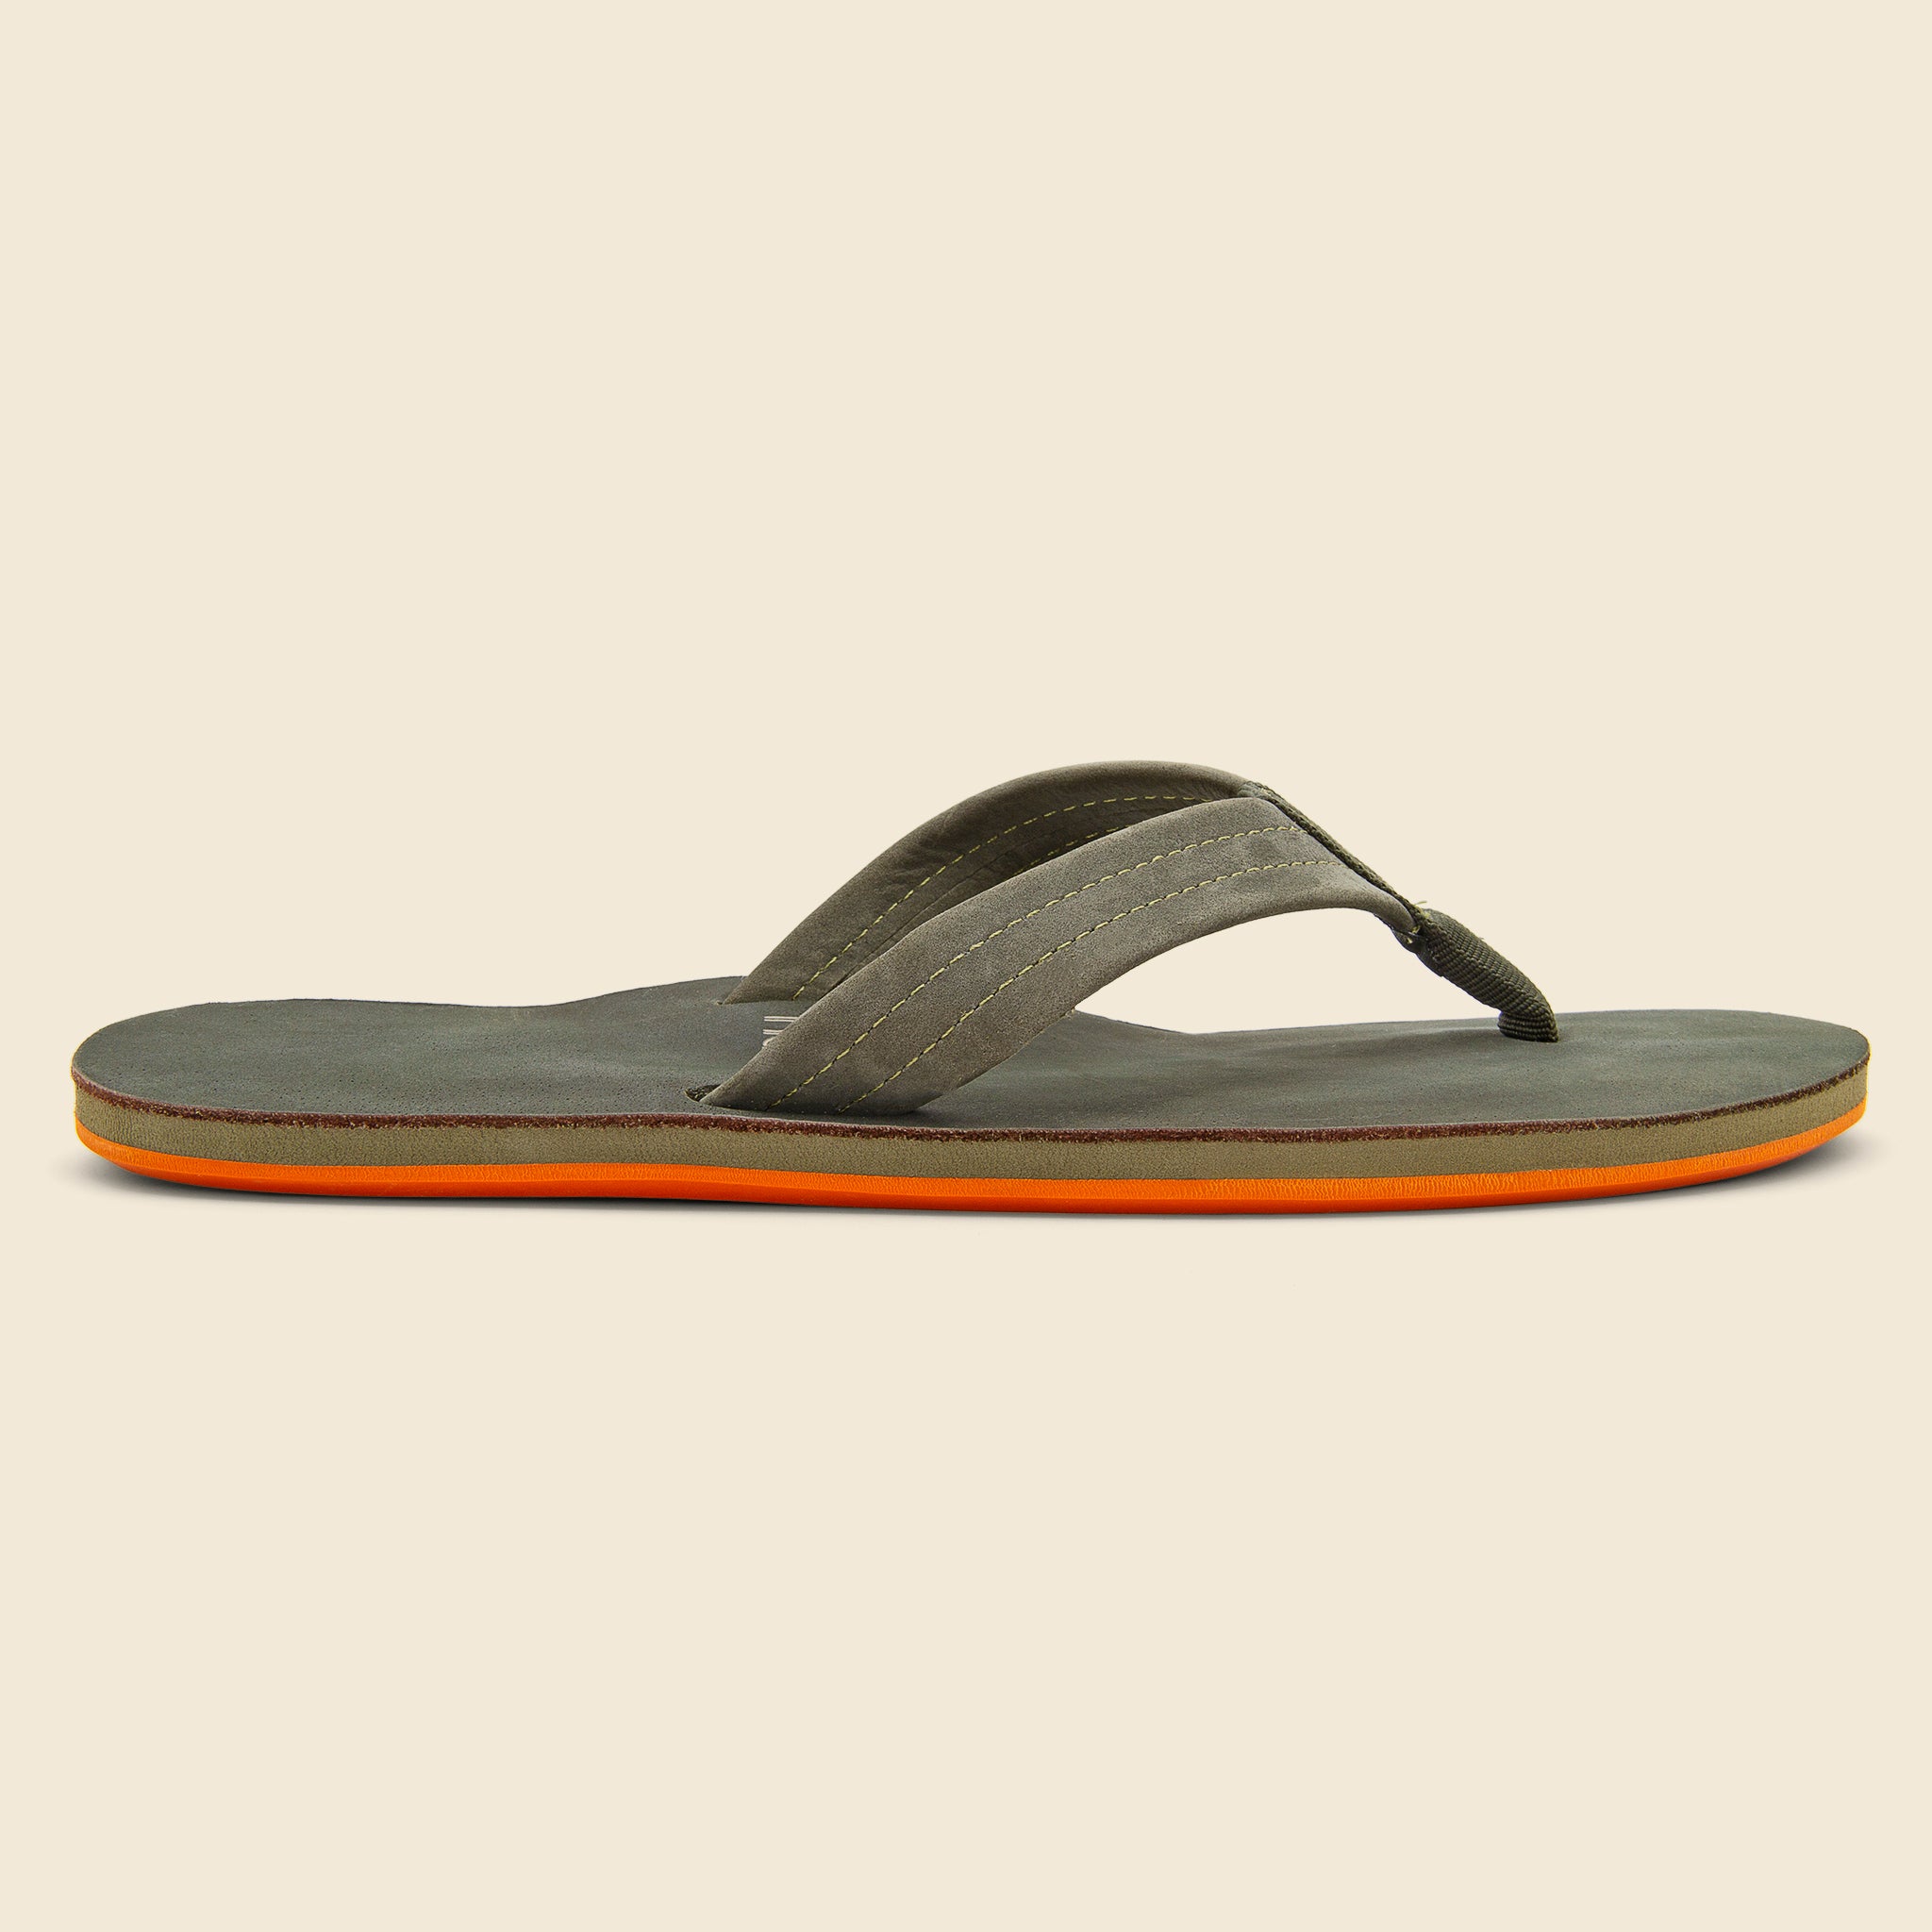 Fields Flip Flop - Forest - Hari Mari - STAG Provisions - Shoes - Sandals / Flops